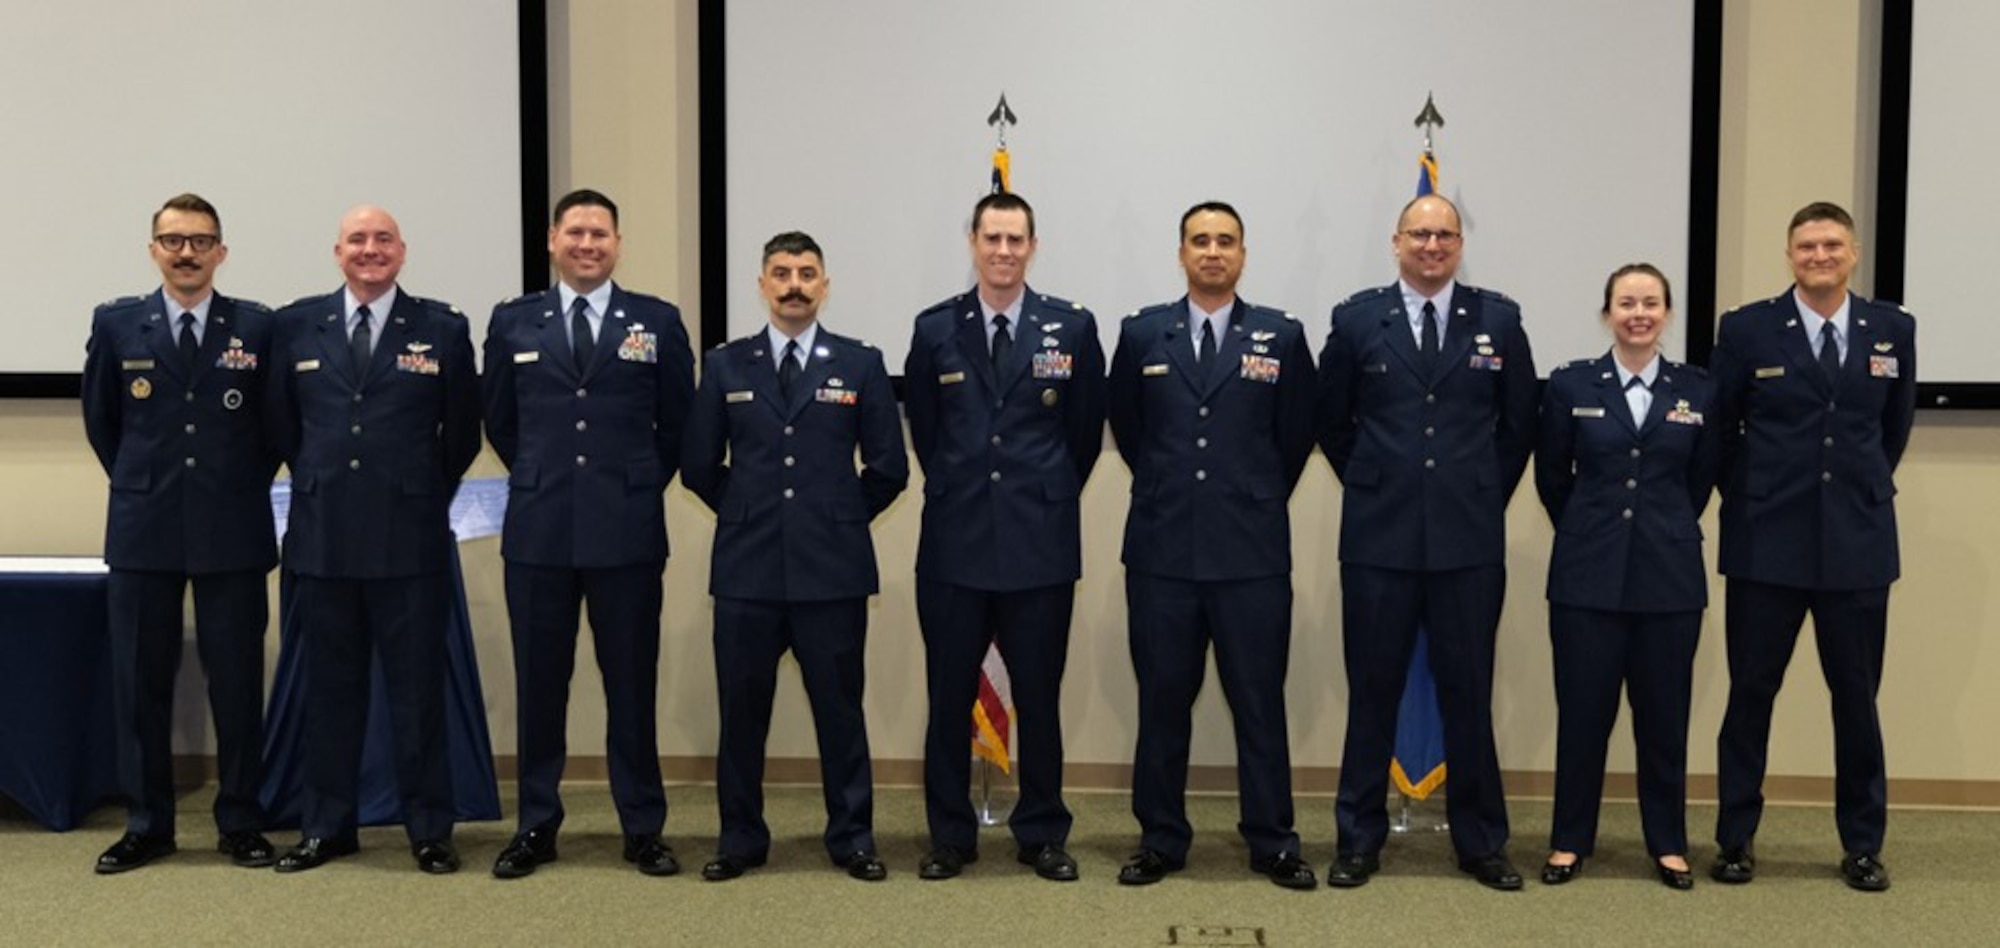 photo of nine USAF Airmen in service dress uniforms standing